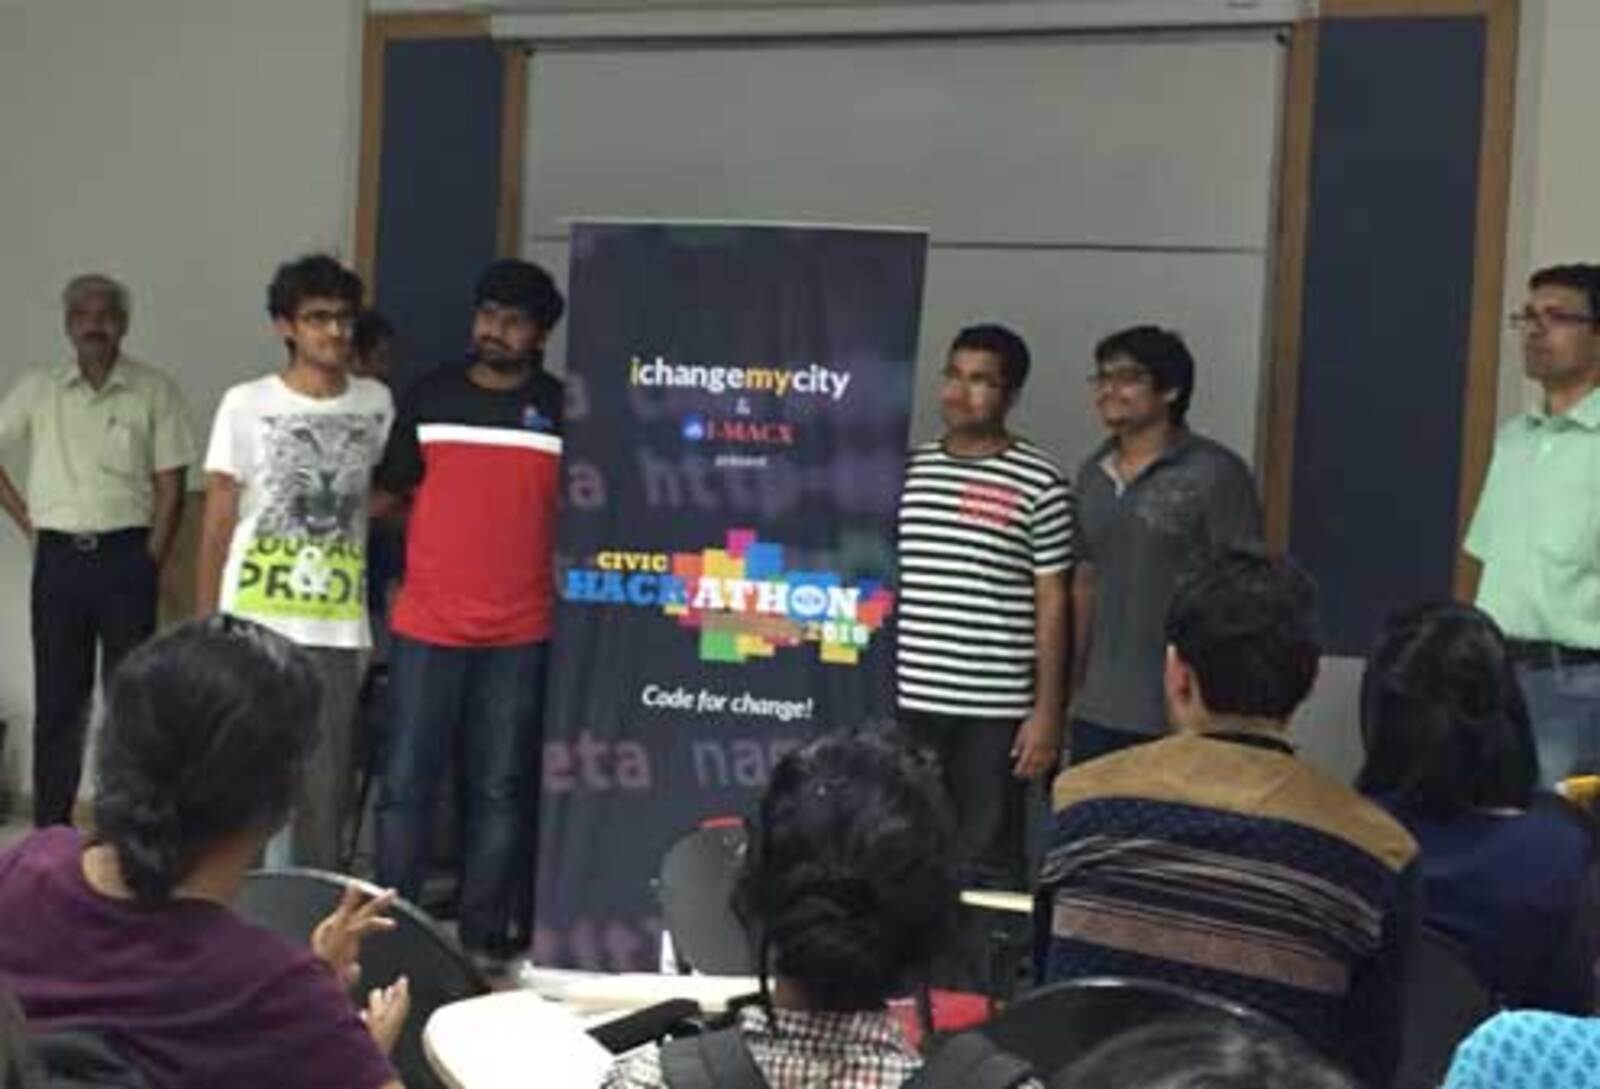 winning team of the hackathon